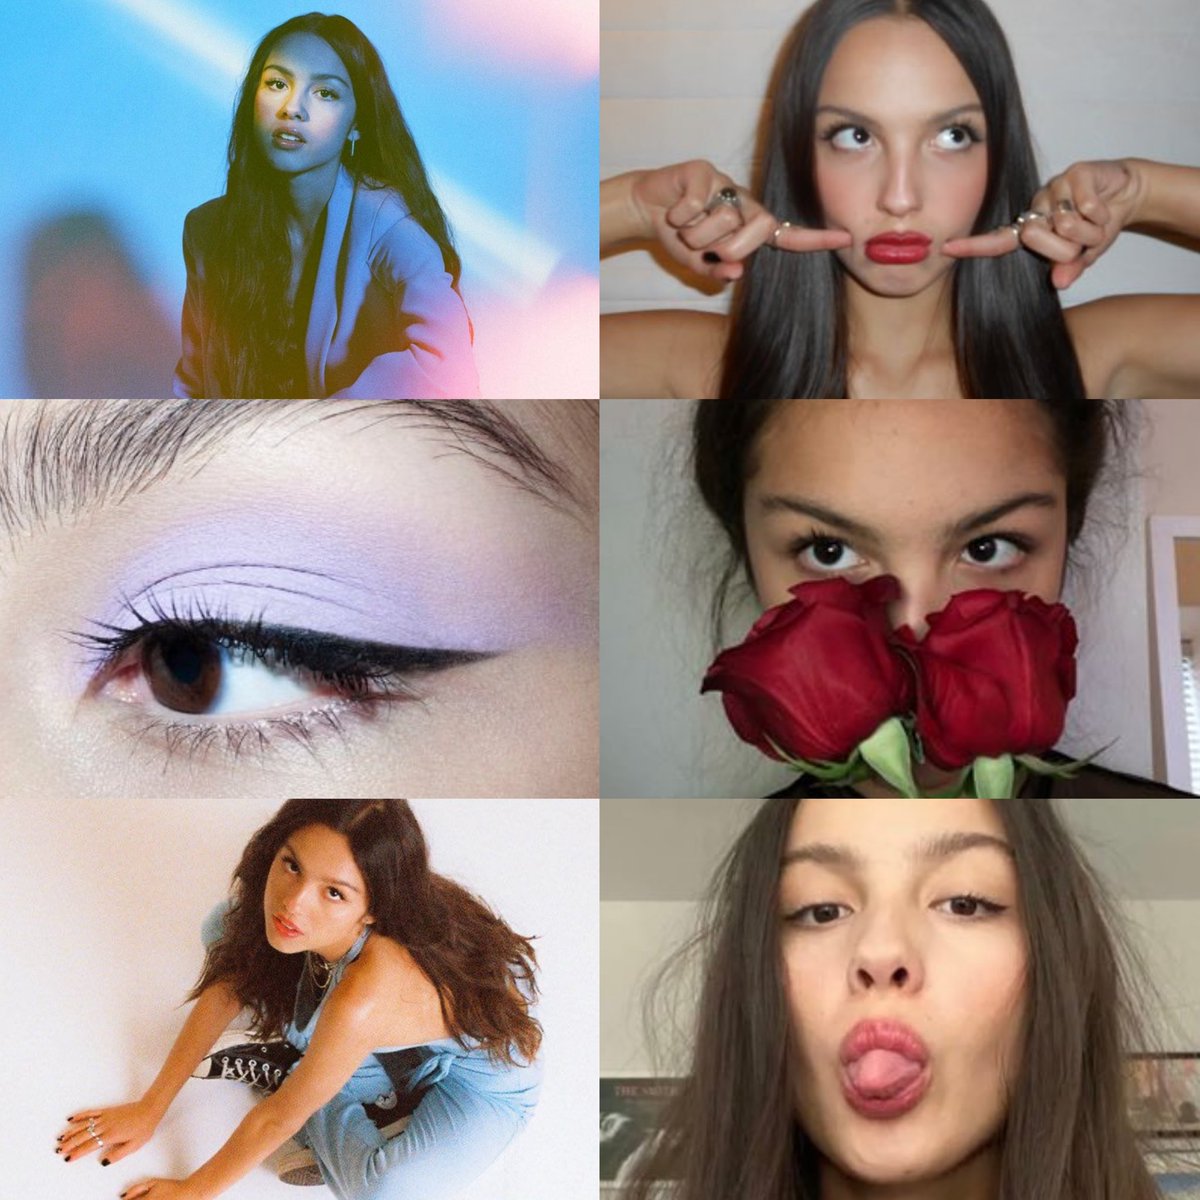 olivia rodrigo's profile pictures over the years